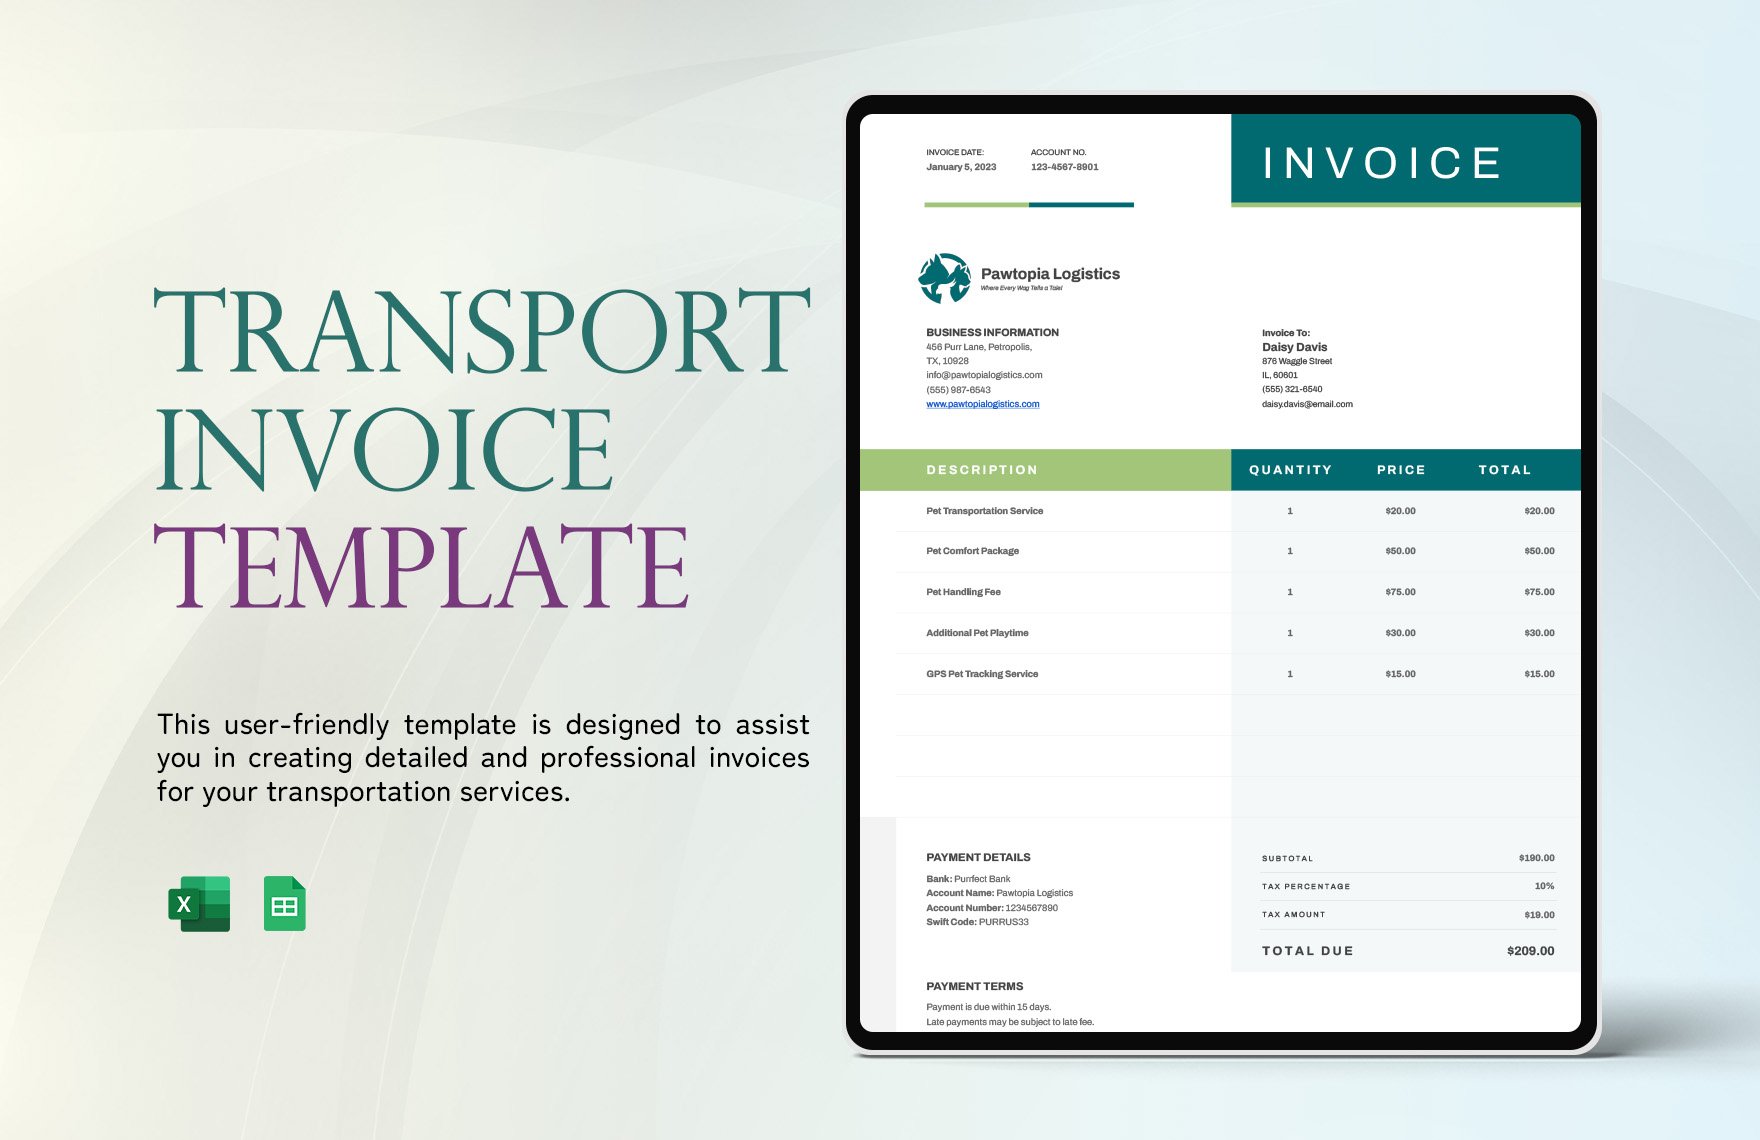 Transport Invoice Template